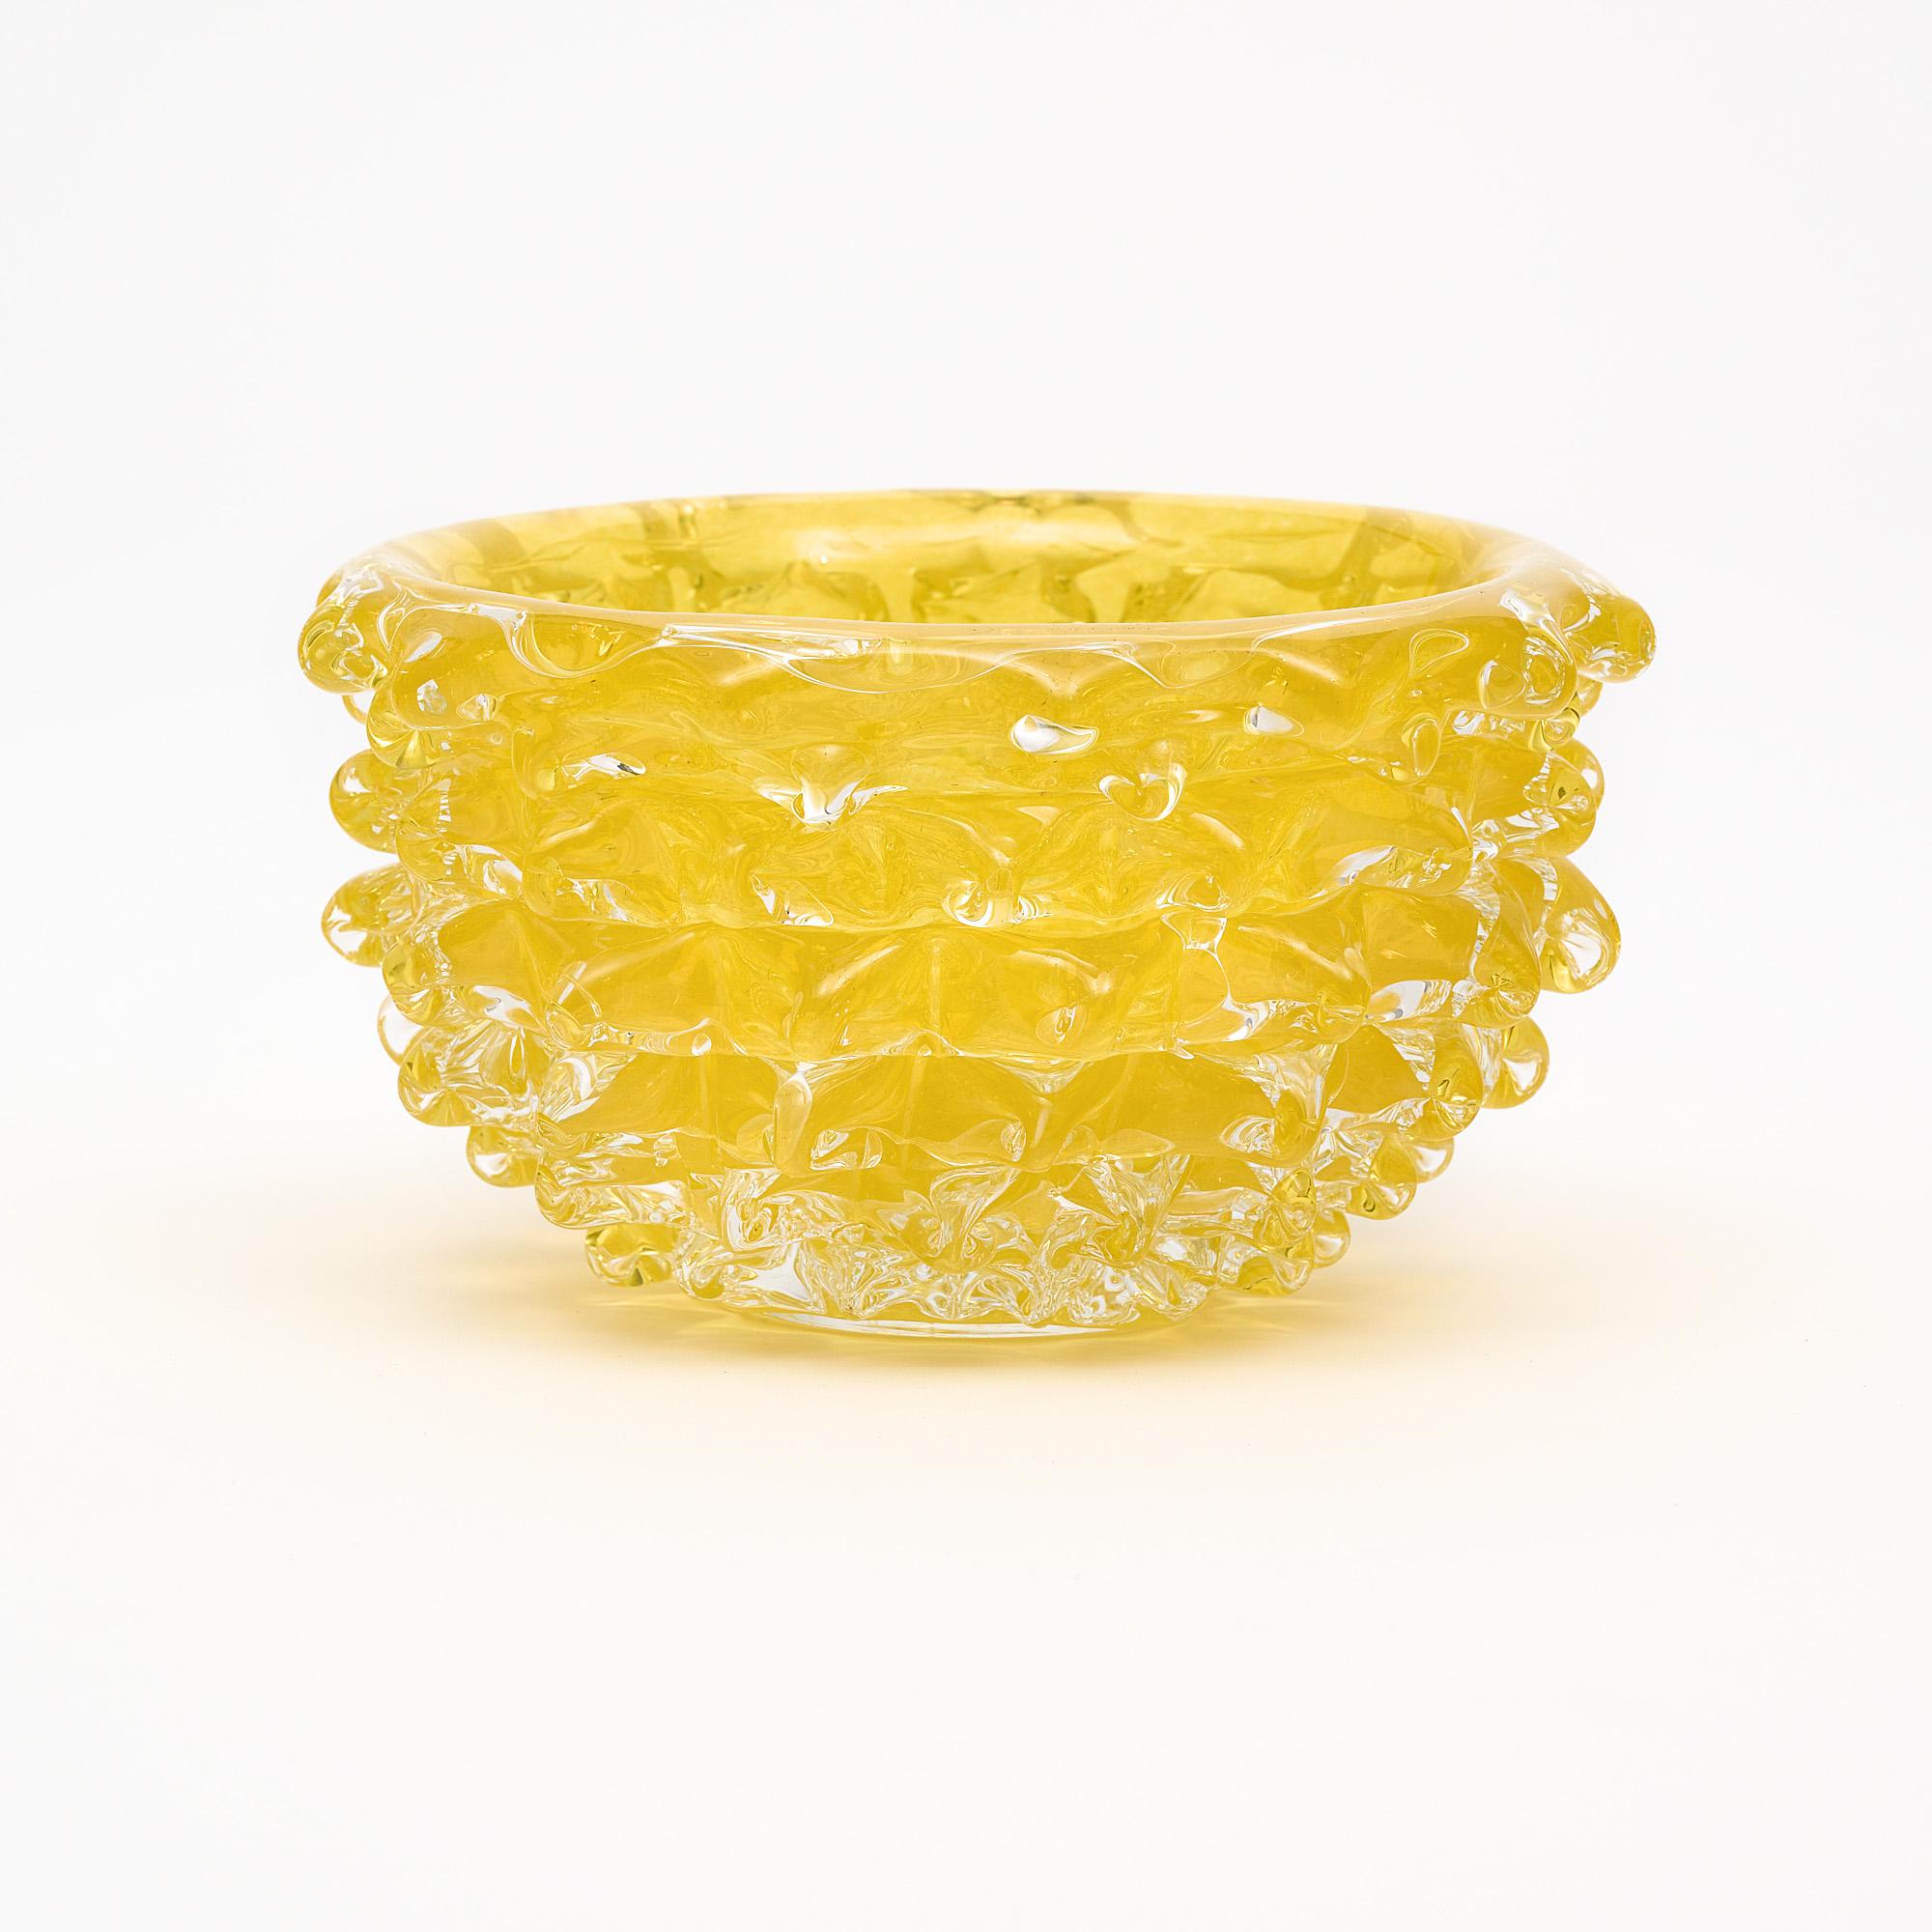 yellow glass fruit bowl